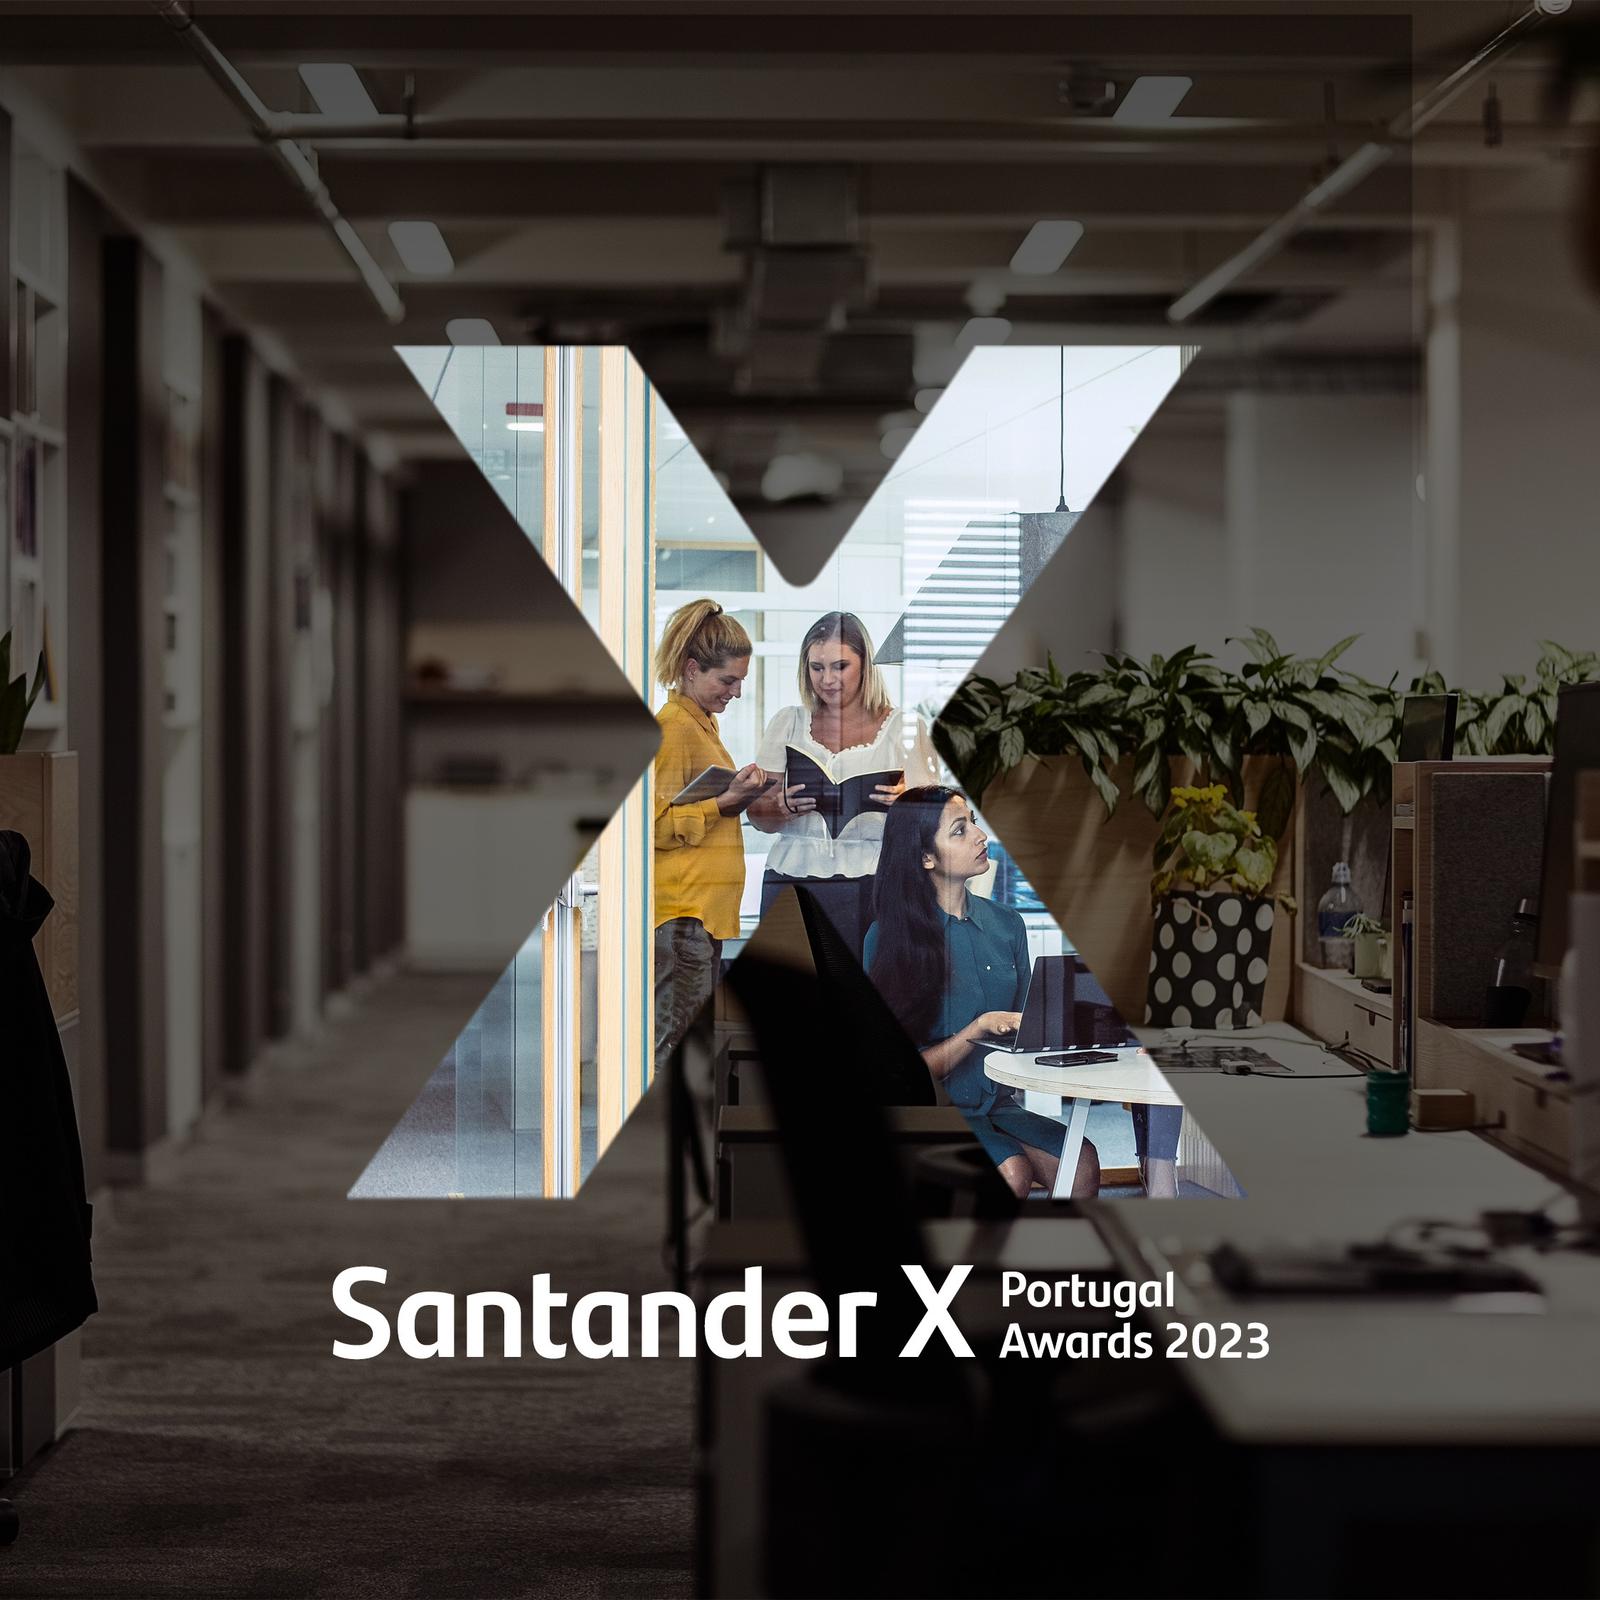 Santander X awards Portugal 2023